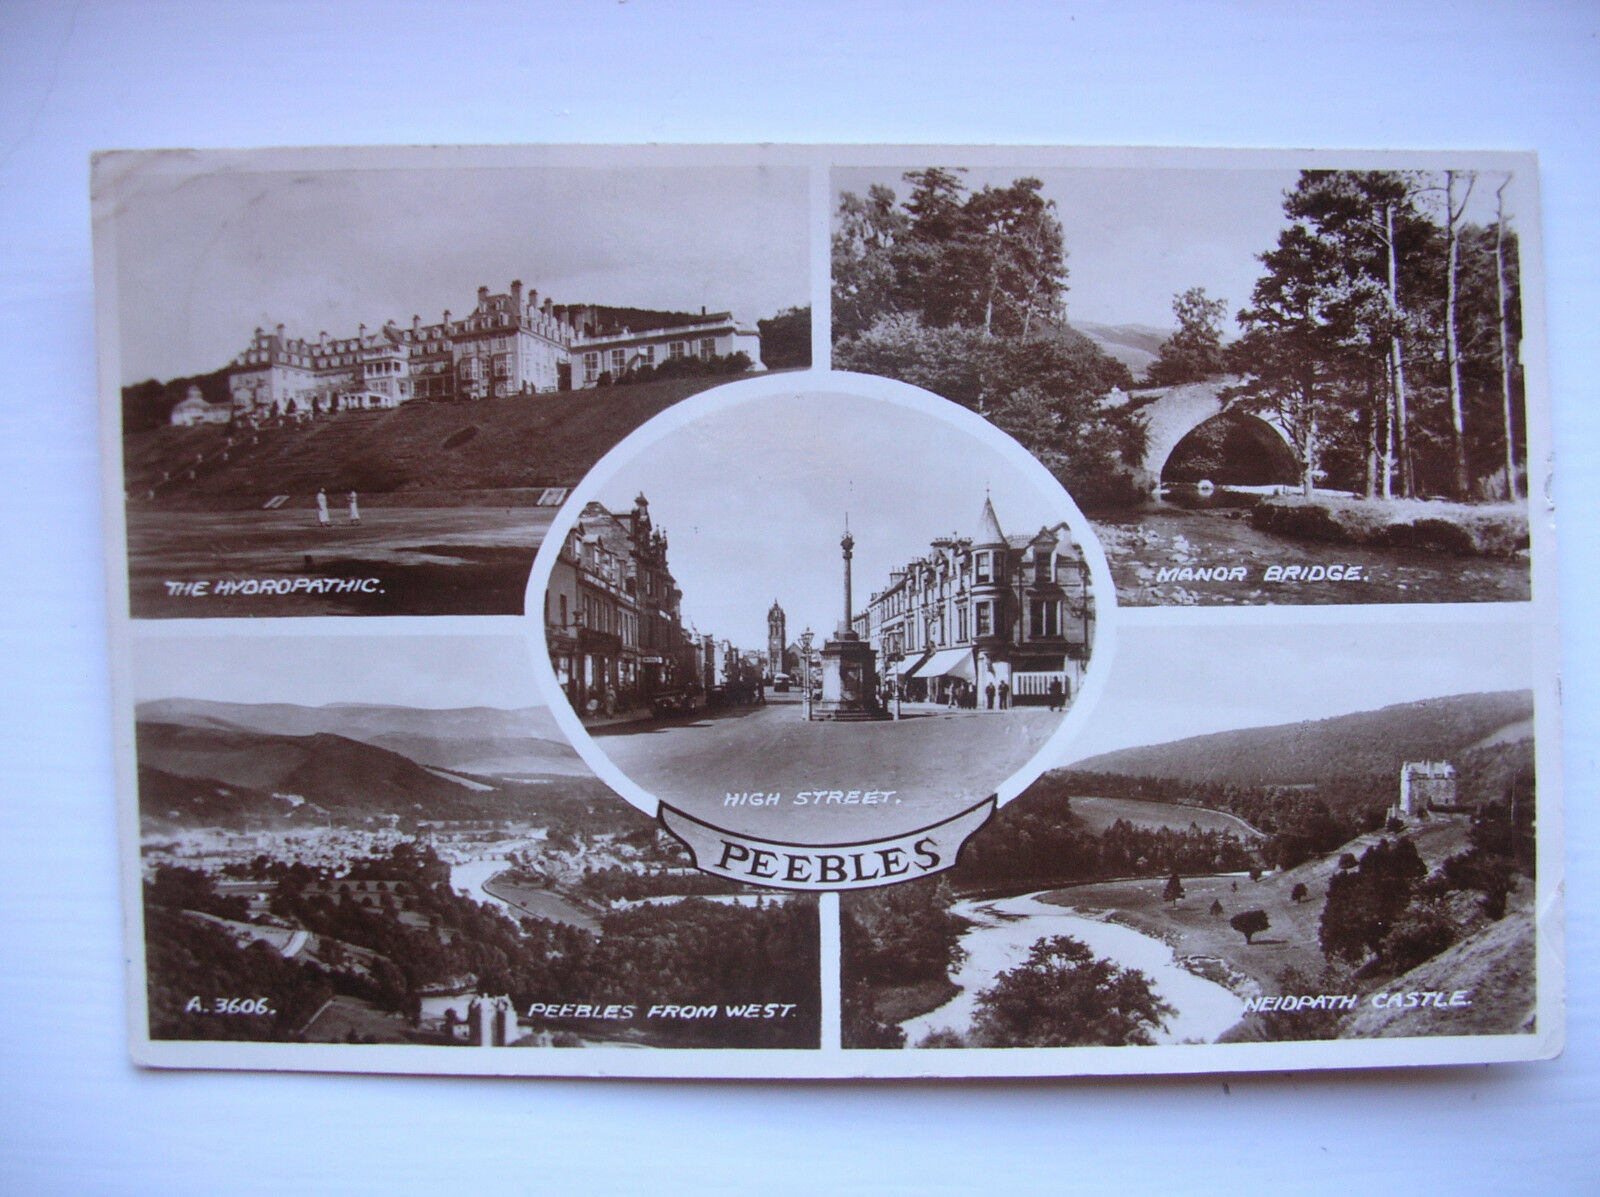 House Clearance - Peebles – Hydropathic, Manor Bridge, Neidpath Castle etc. (Valentine’s – 1937)